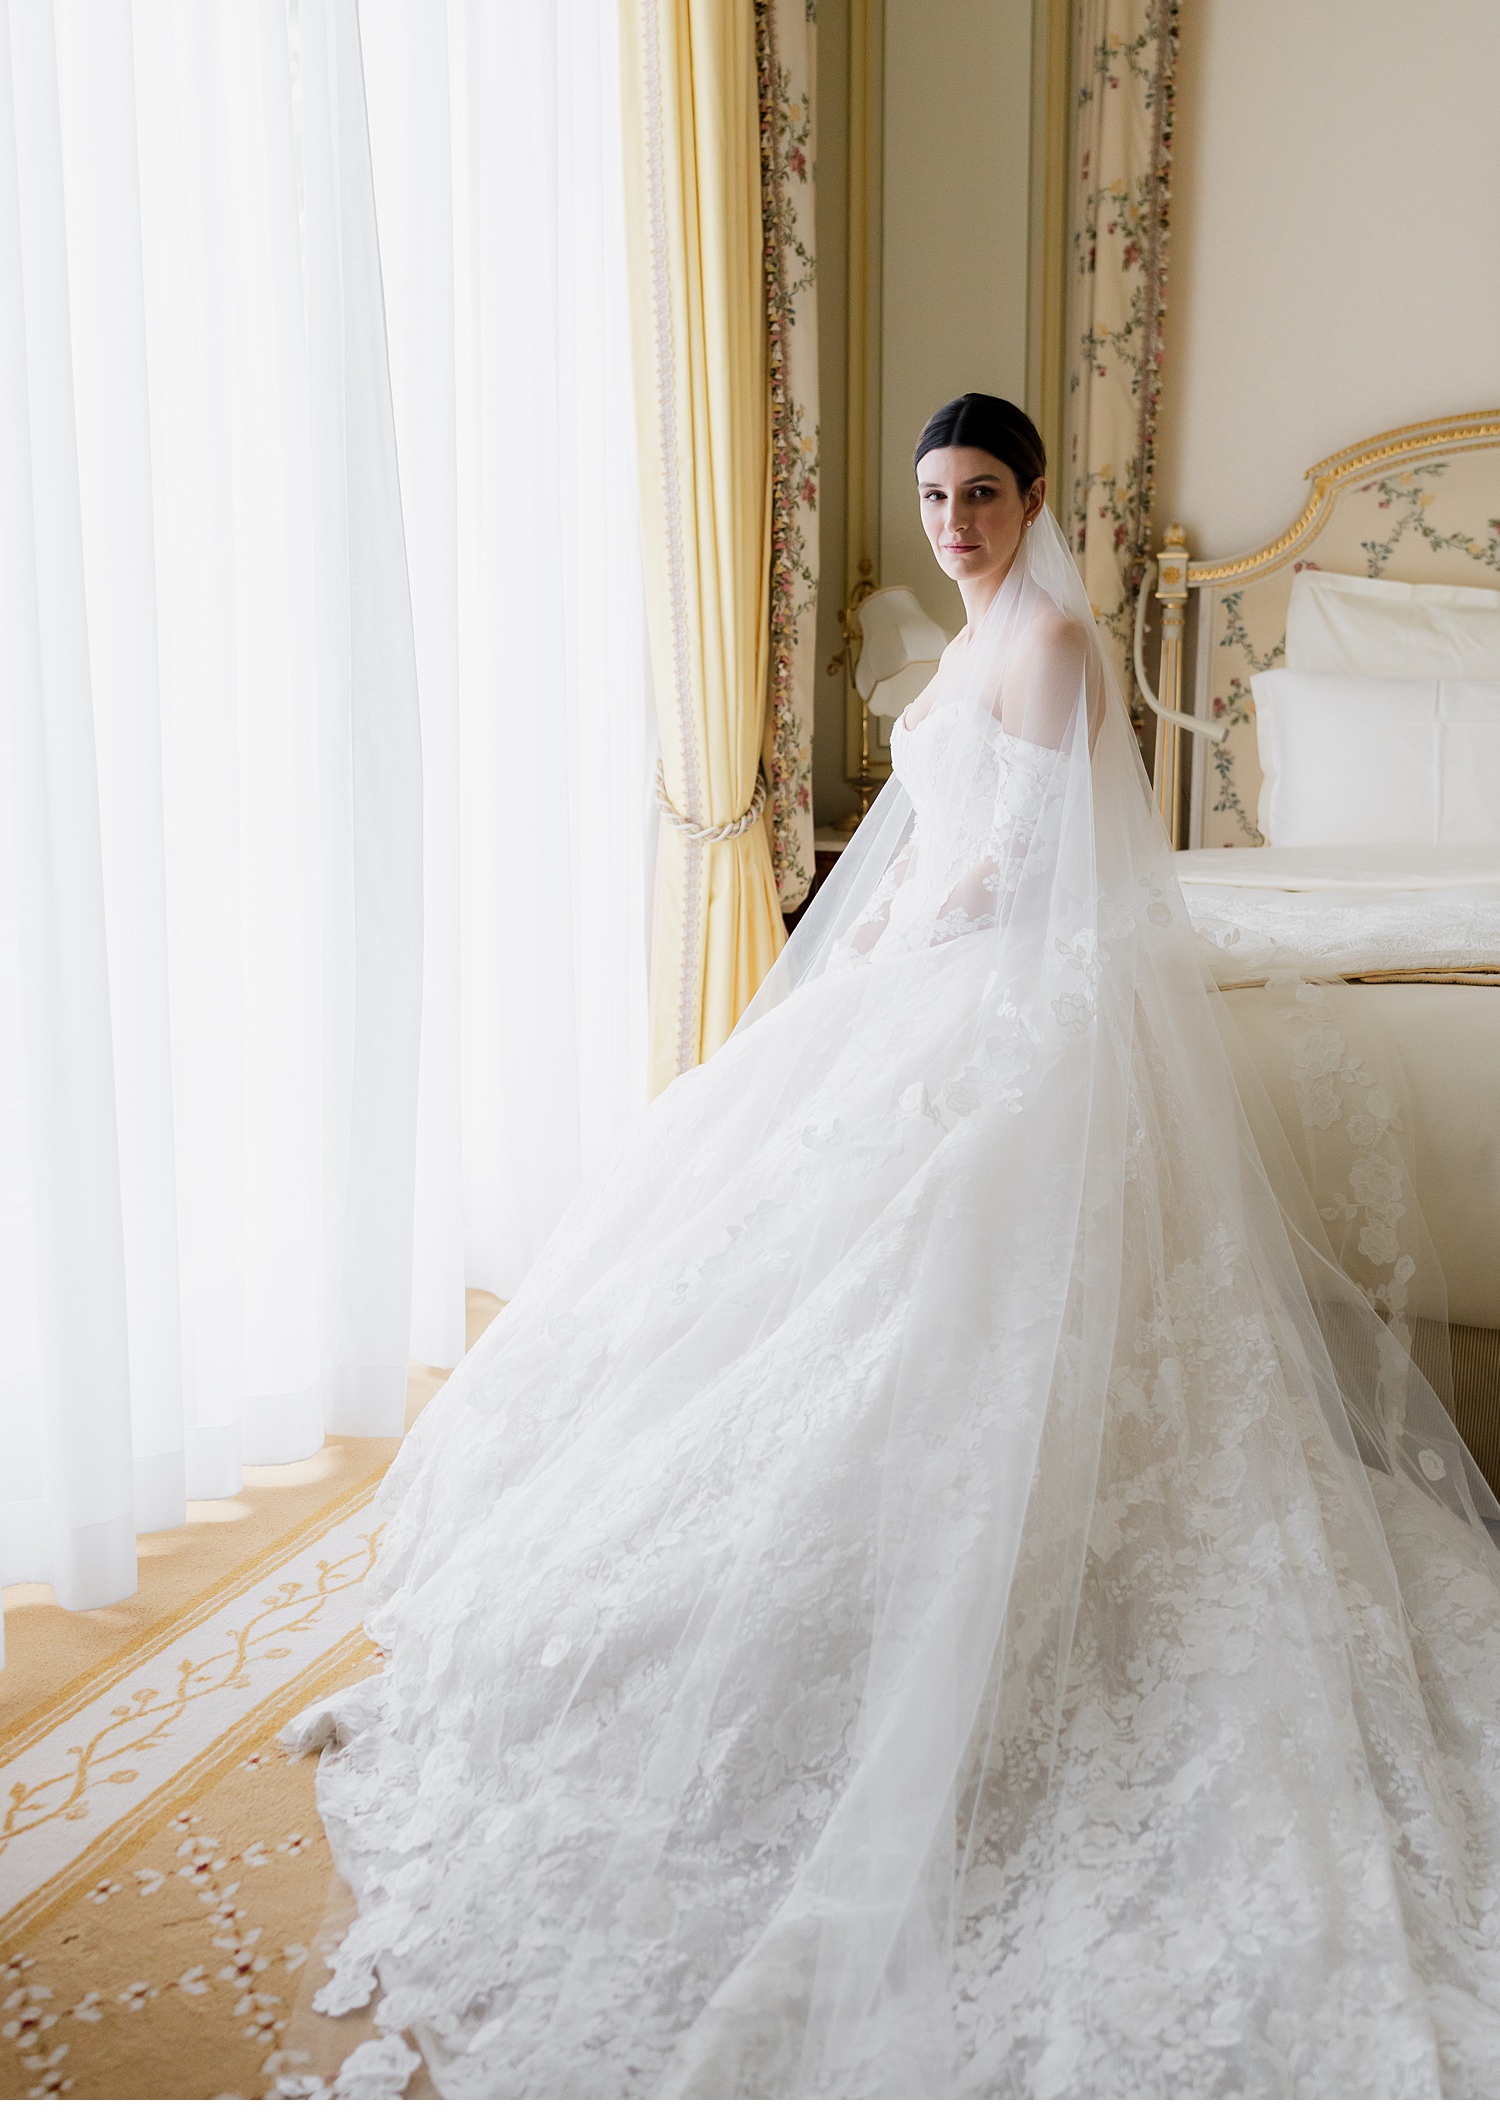 Bride getting ready at the Ritz, Ritz Paris elopement, getting ready portraits, elope to paris